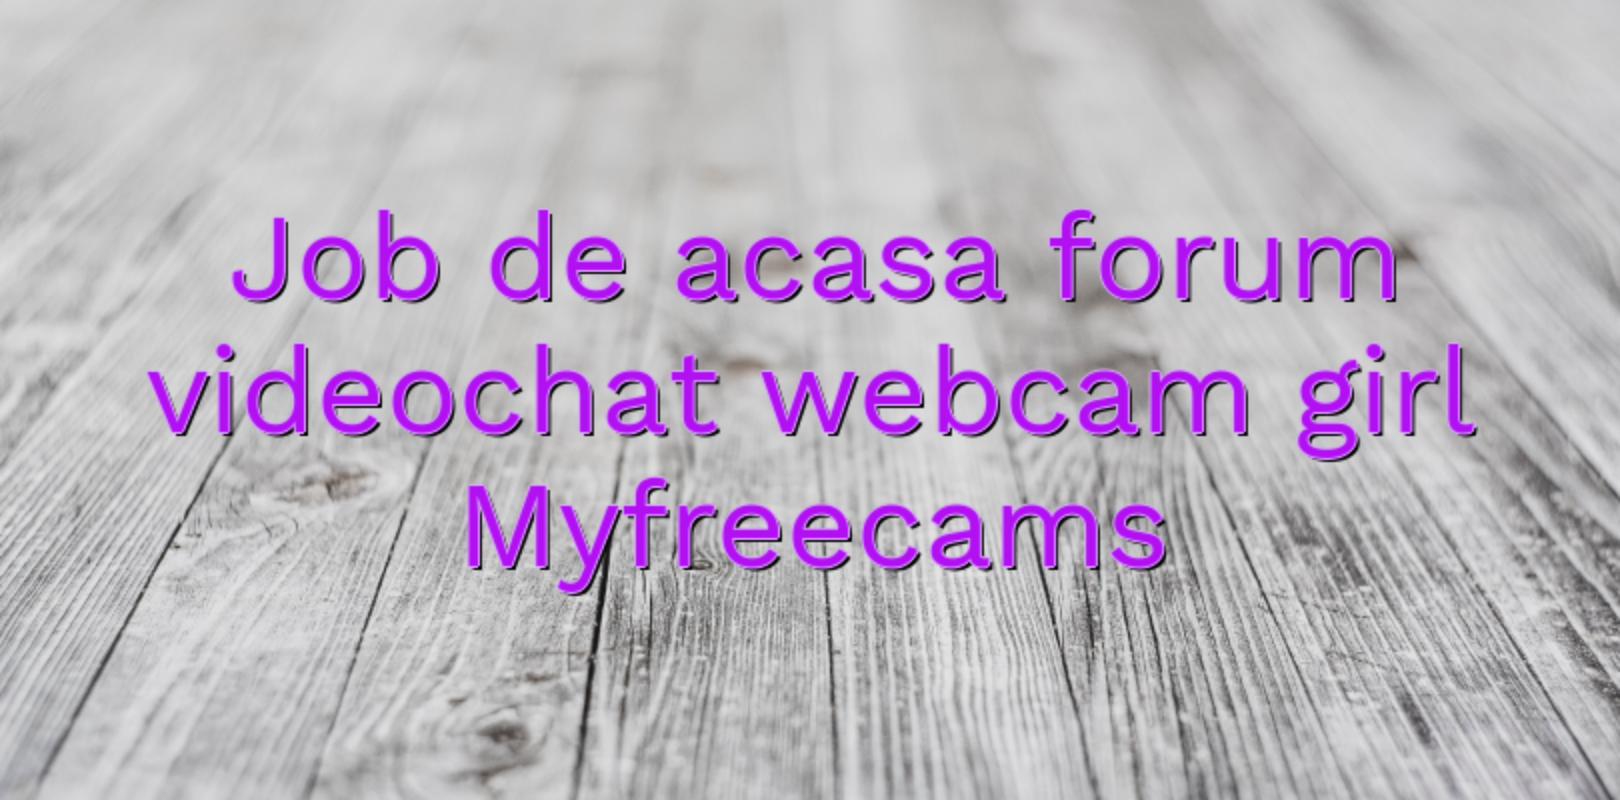 Job de acasa forum videochat webcam girl Myfreecams - Videochat ...